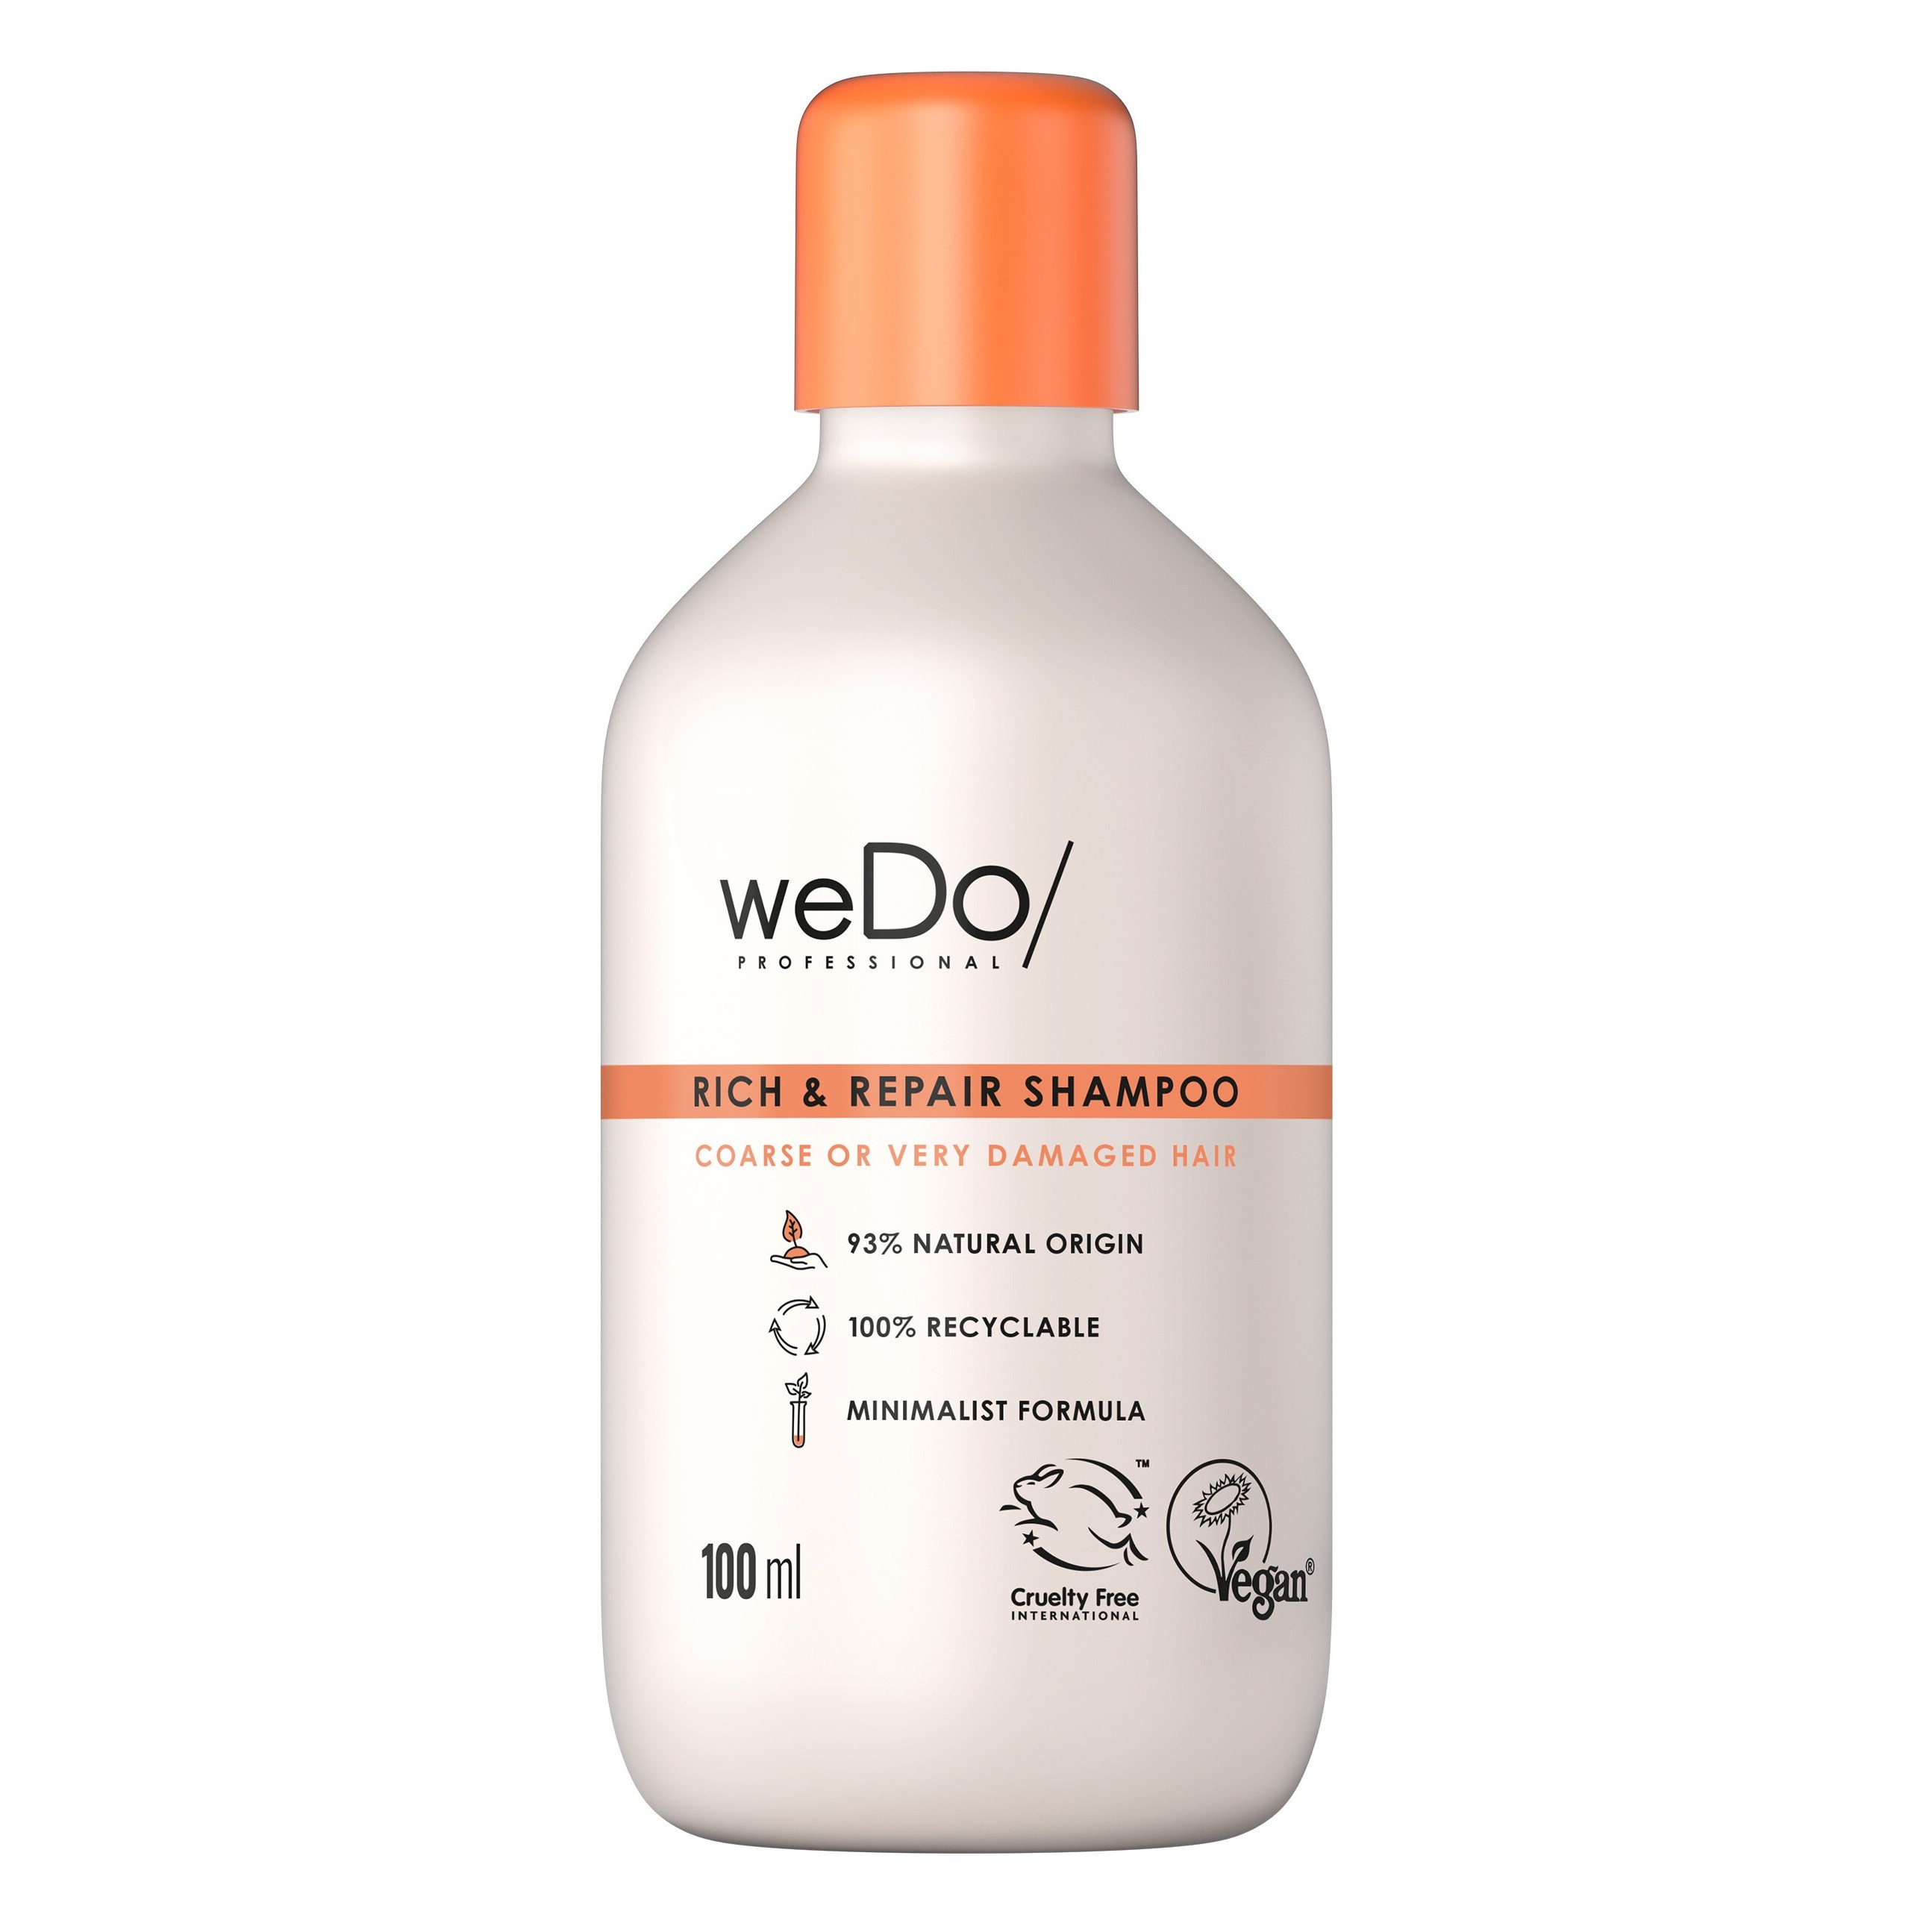 weDo/Professional Rich & Repair Shampoo 100 ml